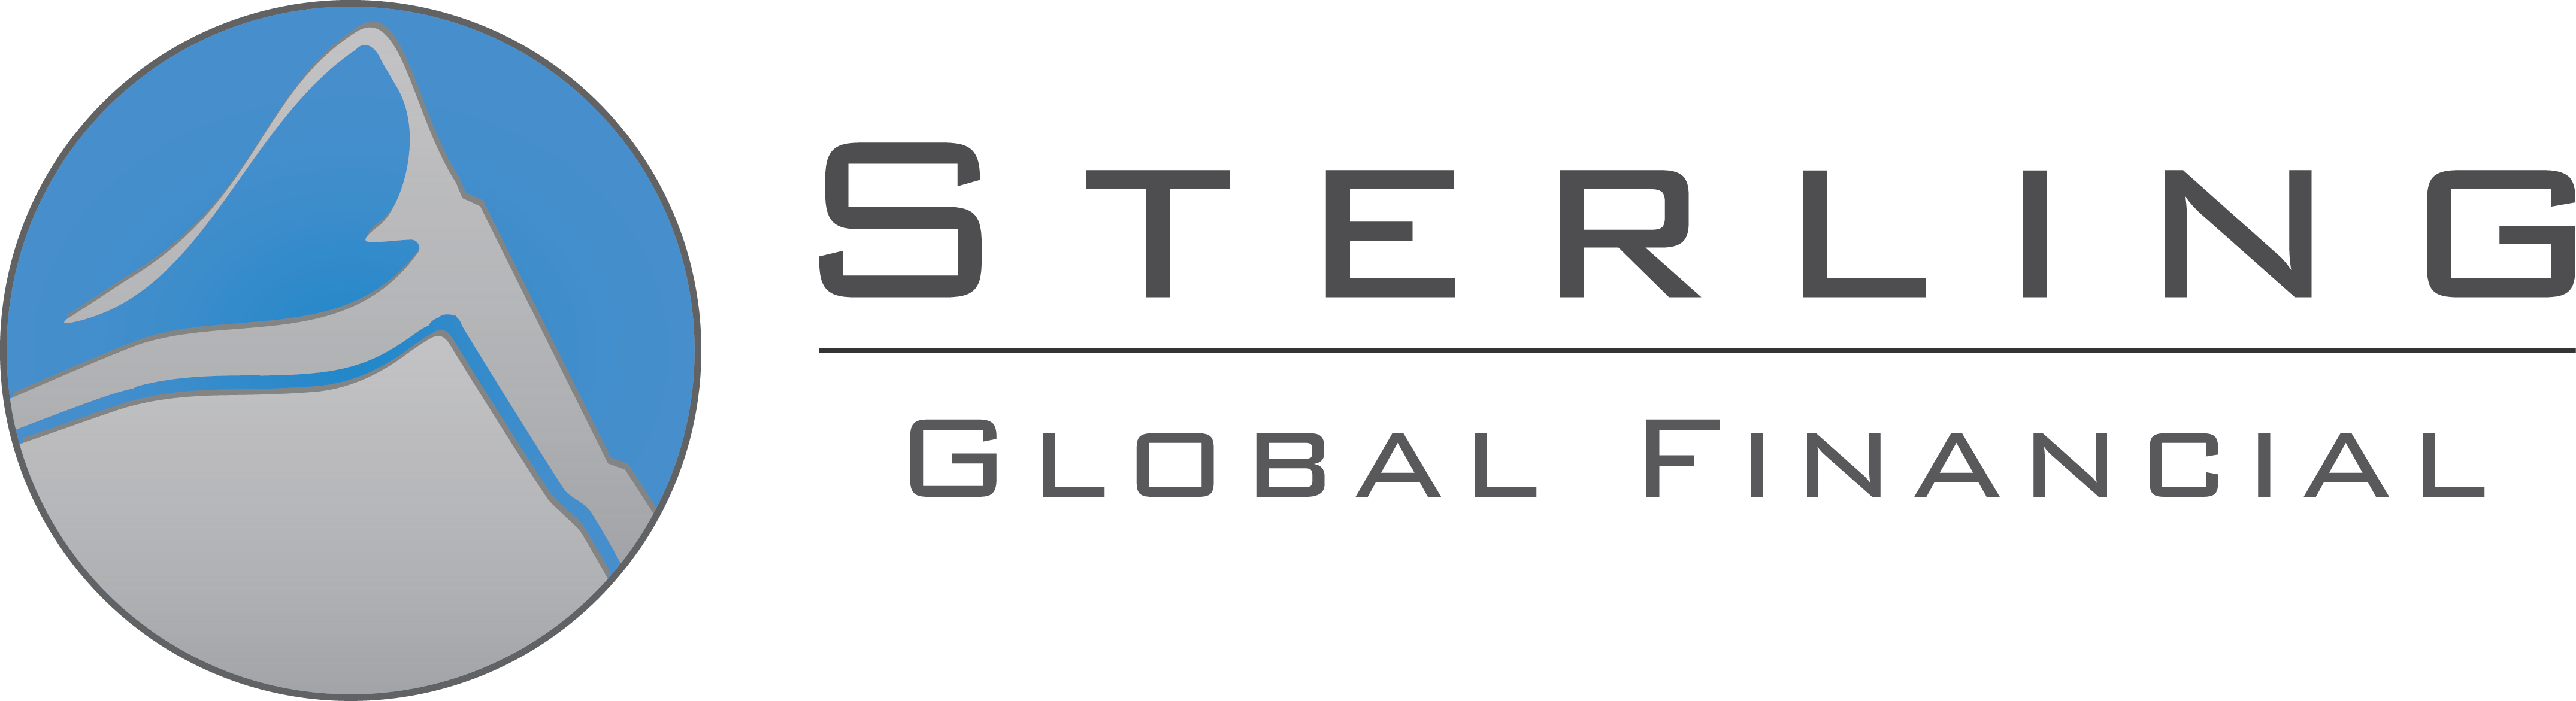 Sterling global